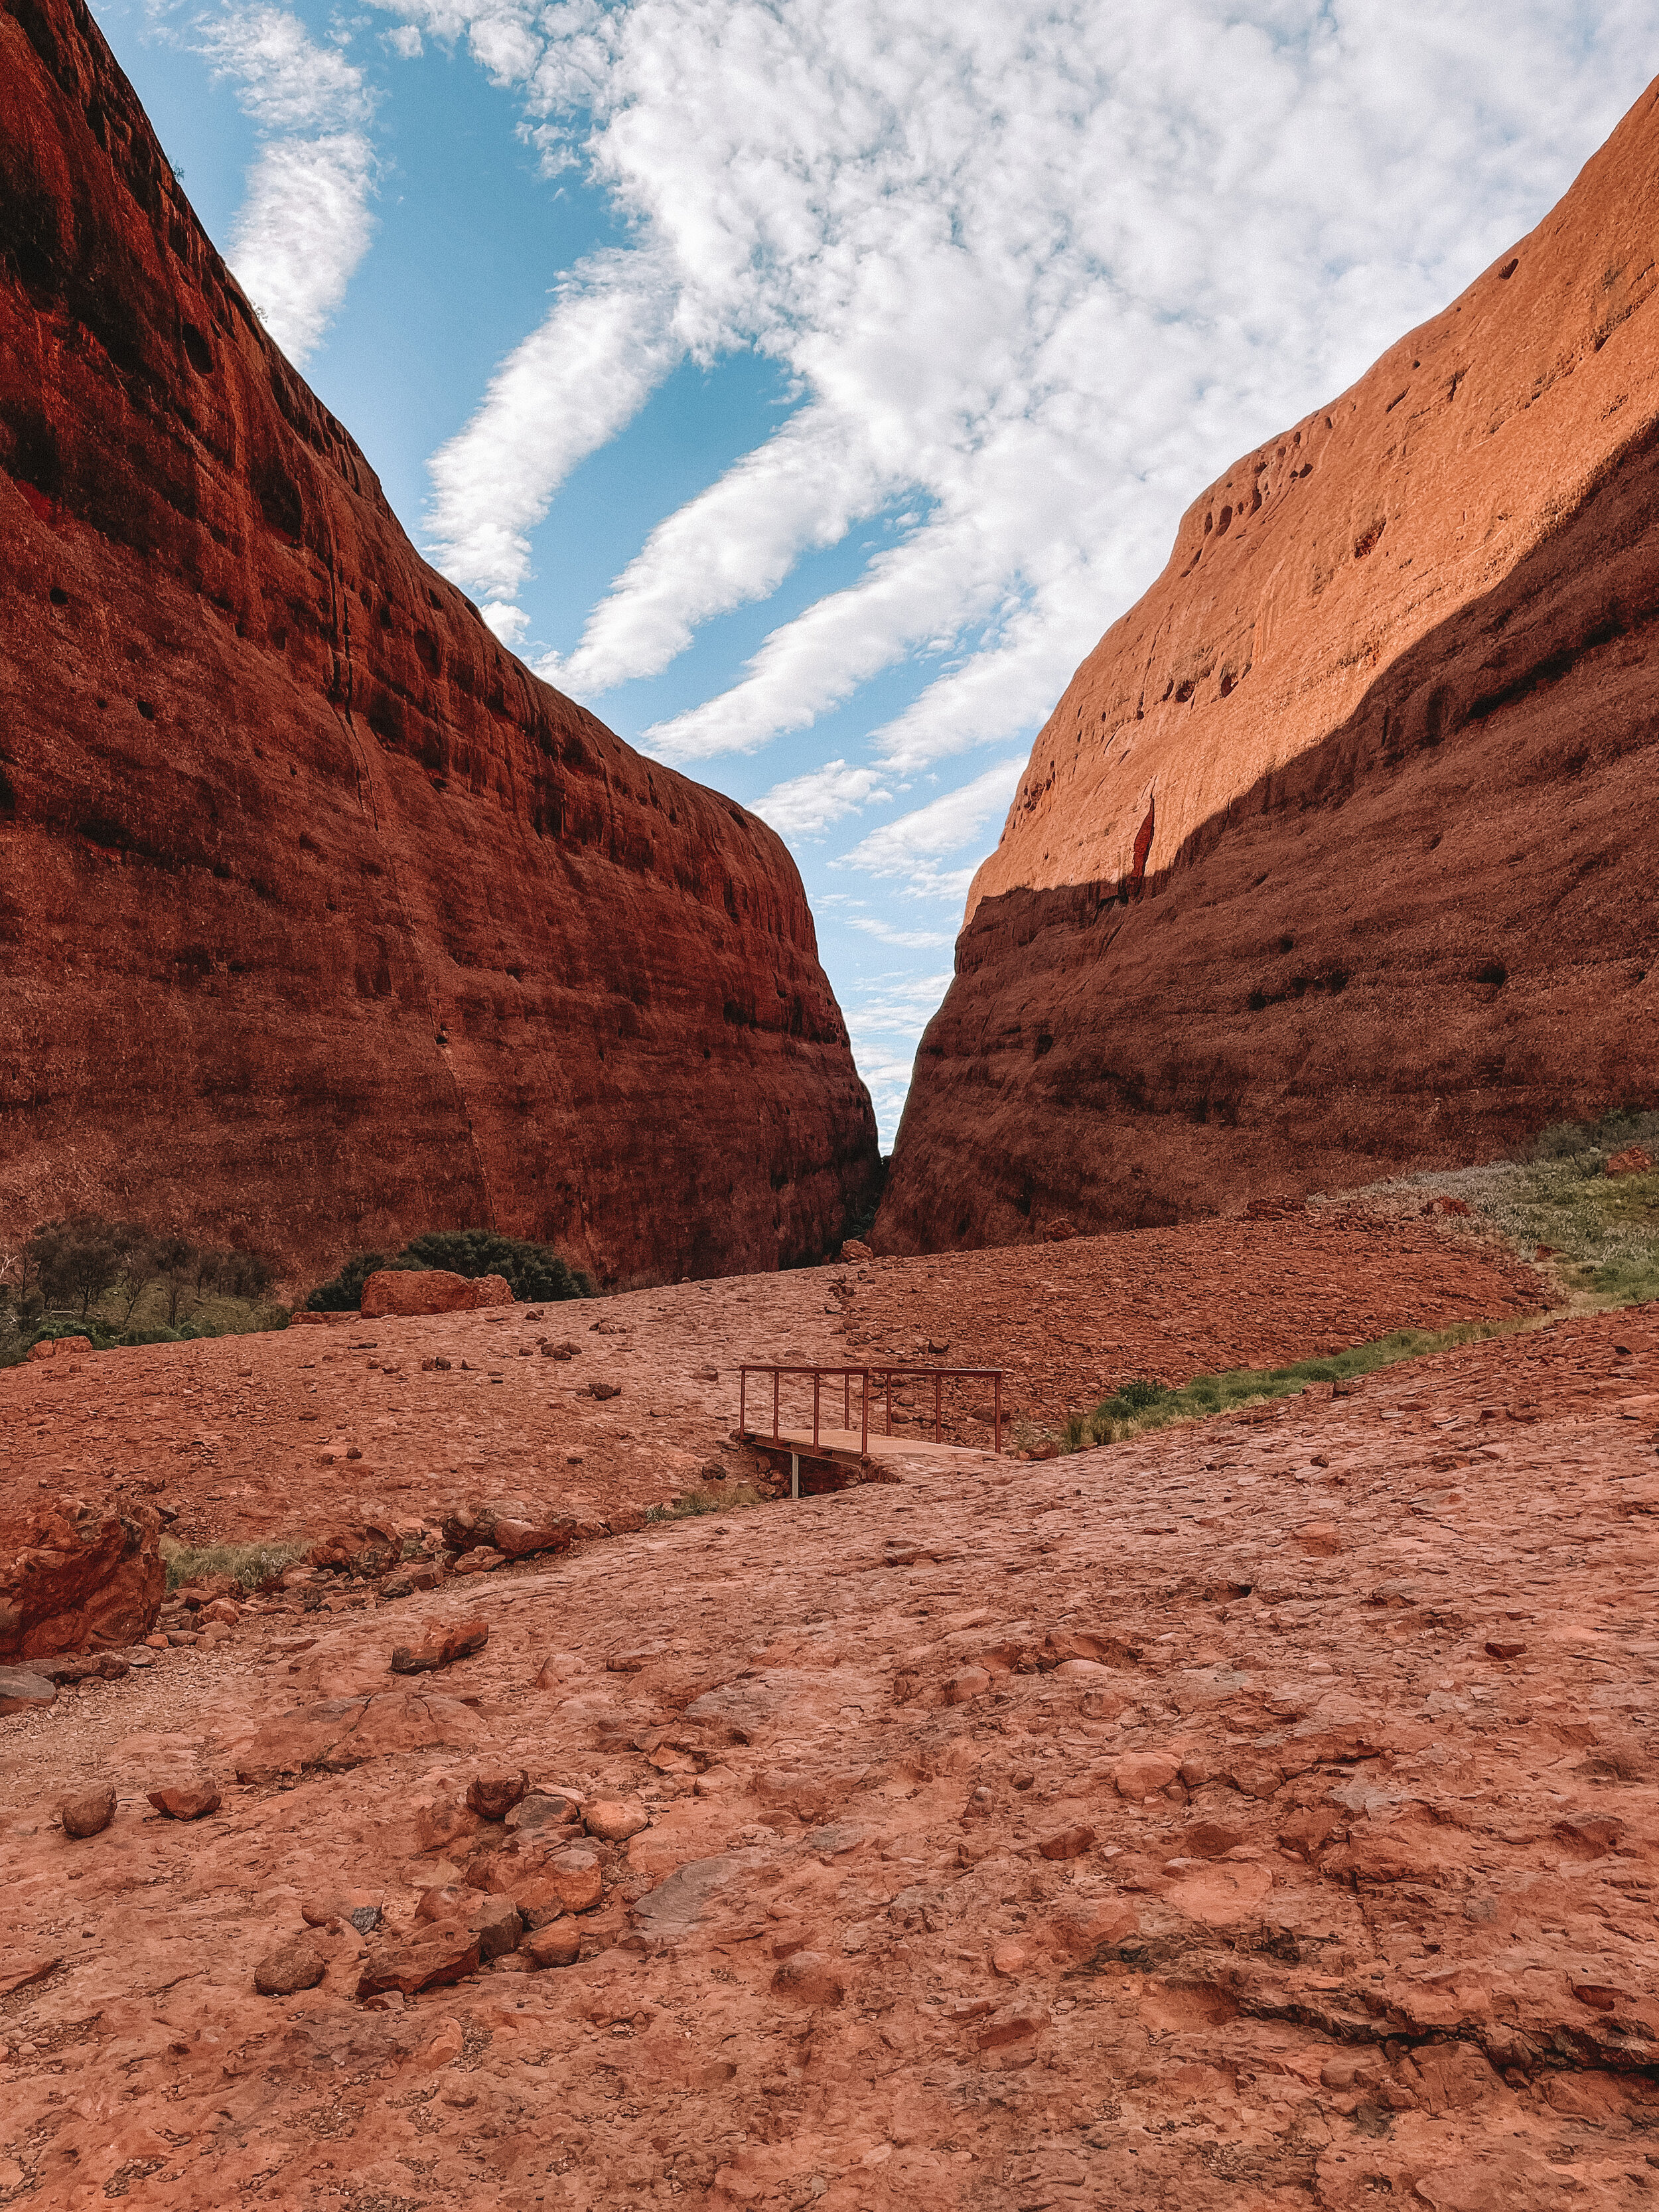 Mala Gorge and the clouds - Kata Tjuta - Uluru - Northern Territory - Australia